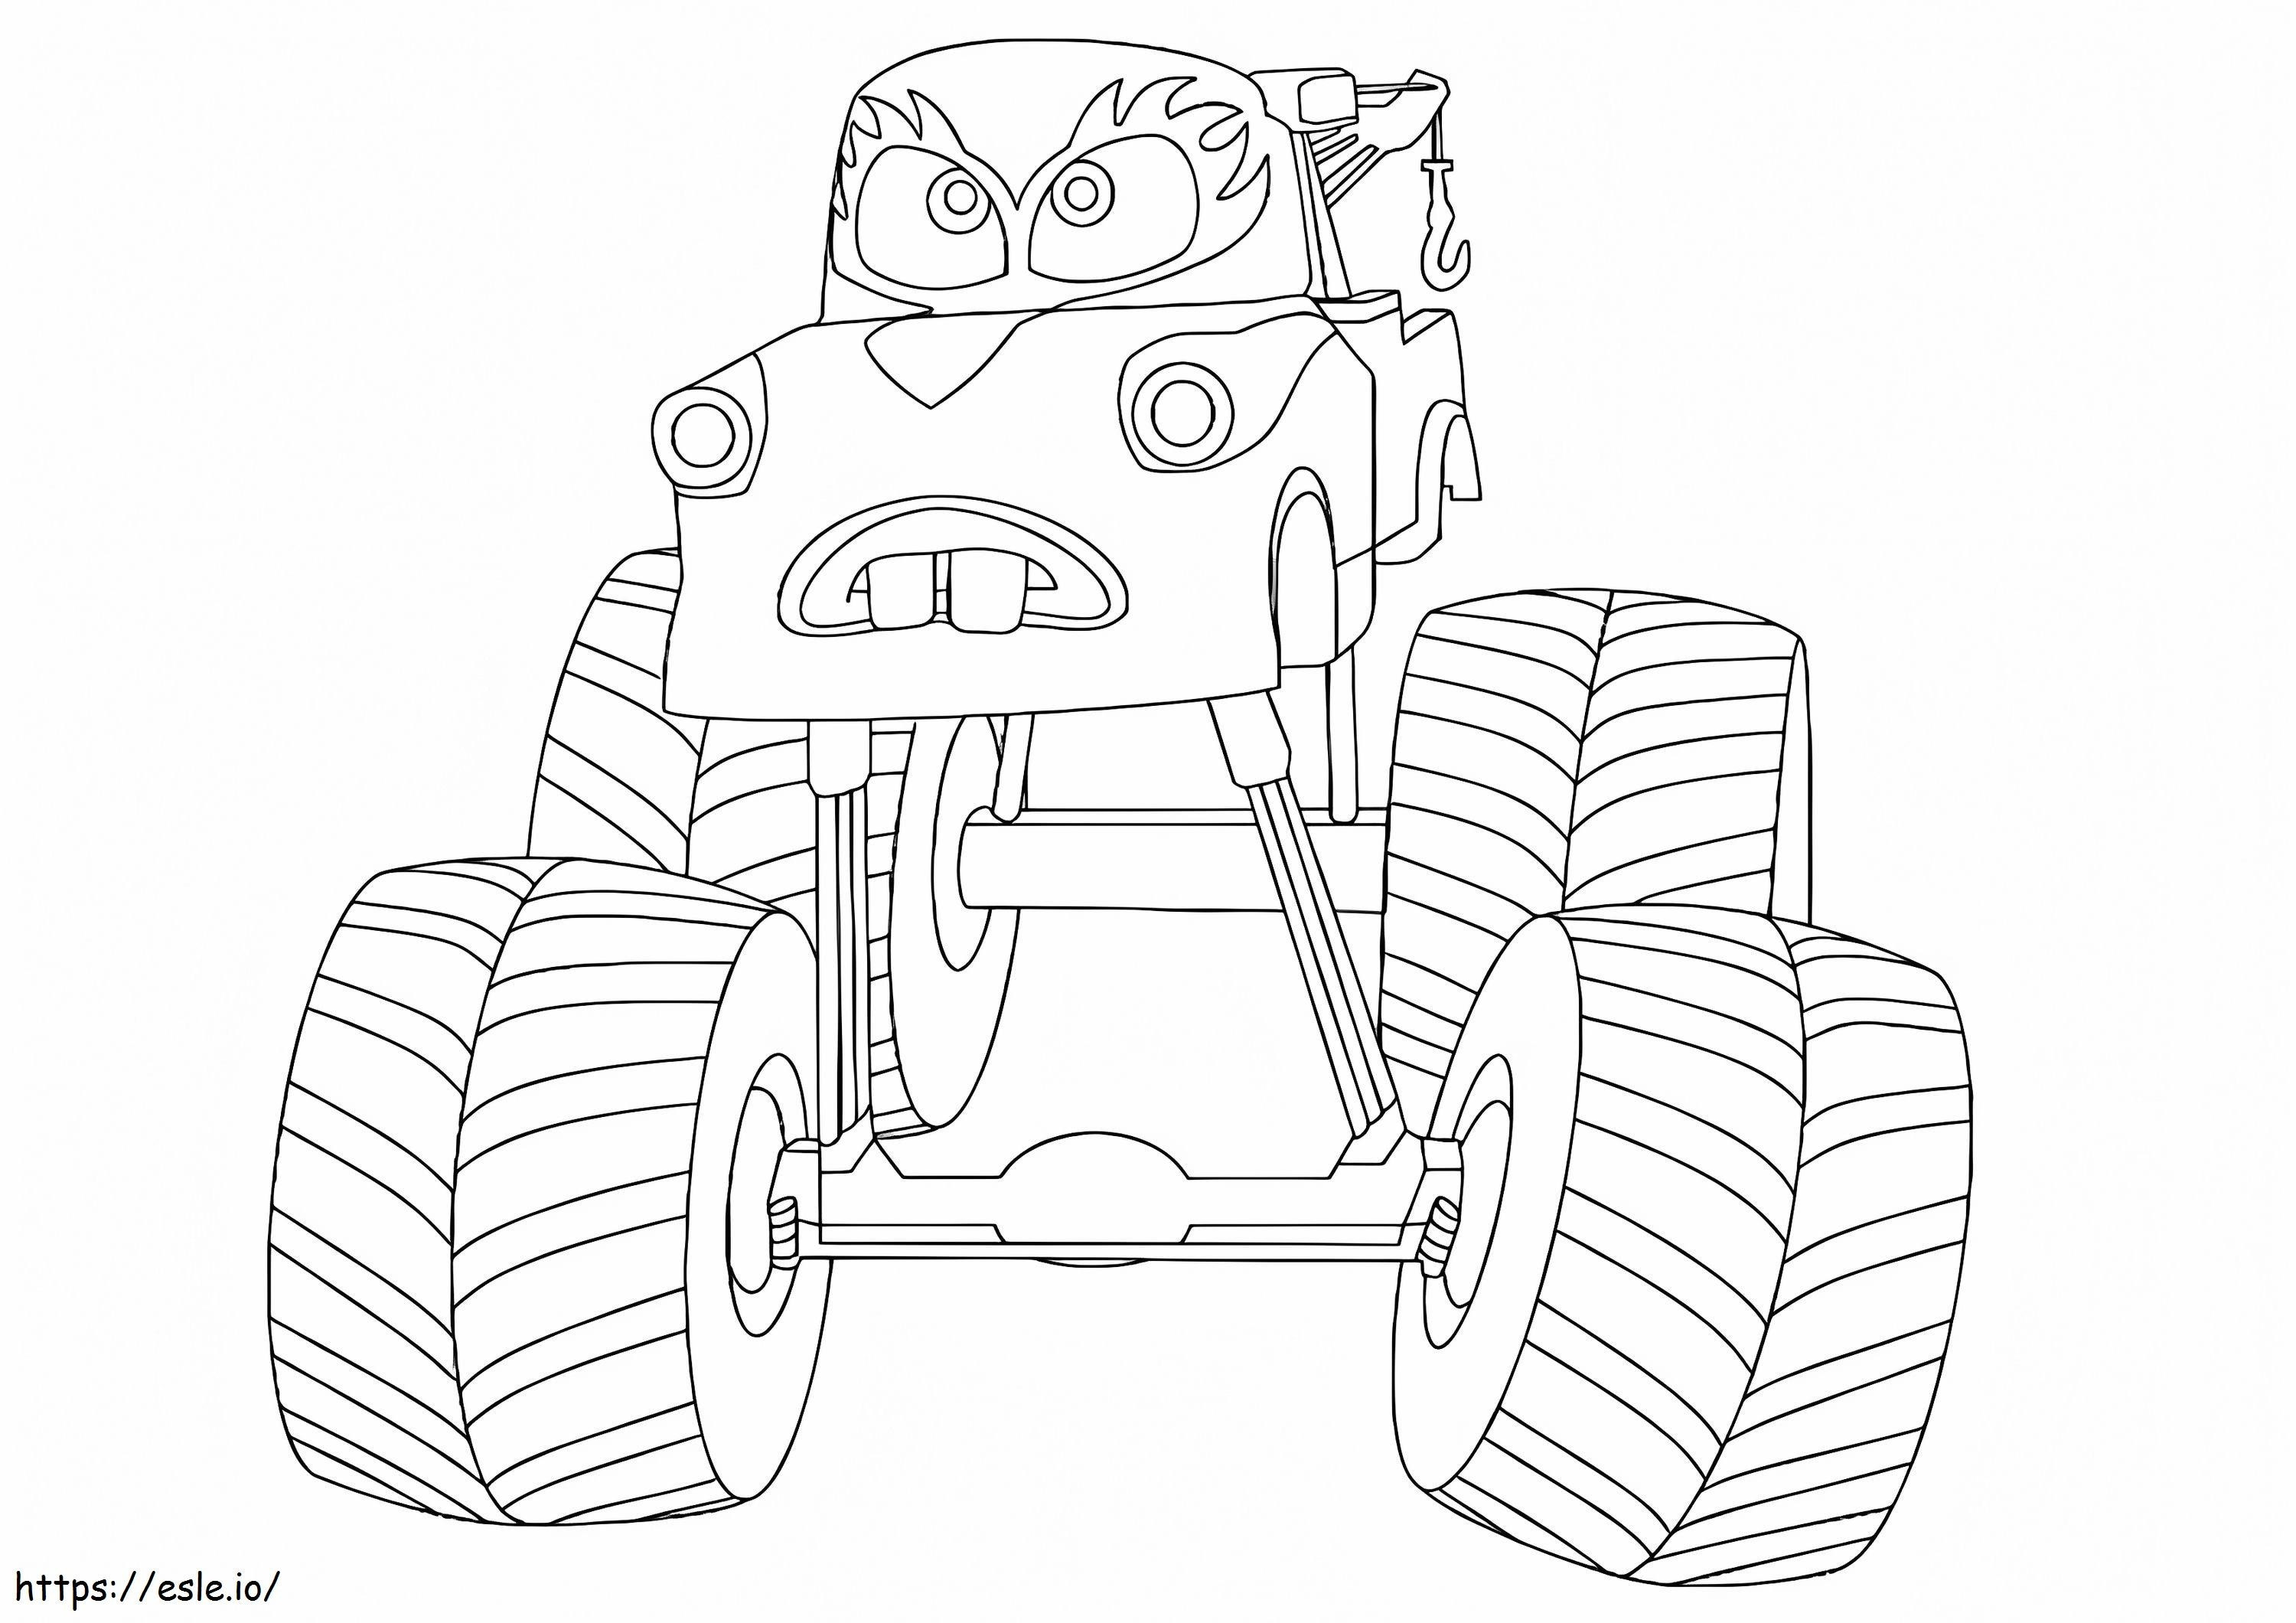 Desenhos para colorir de Monster Truck